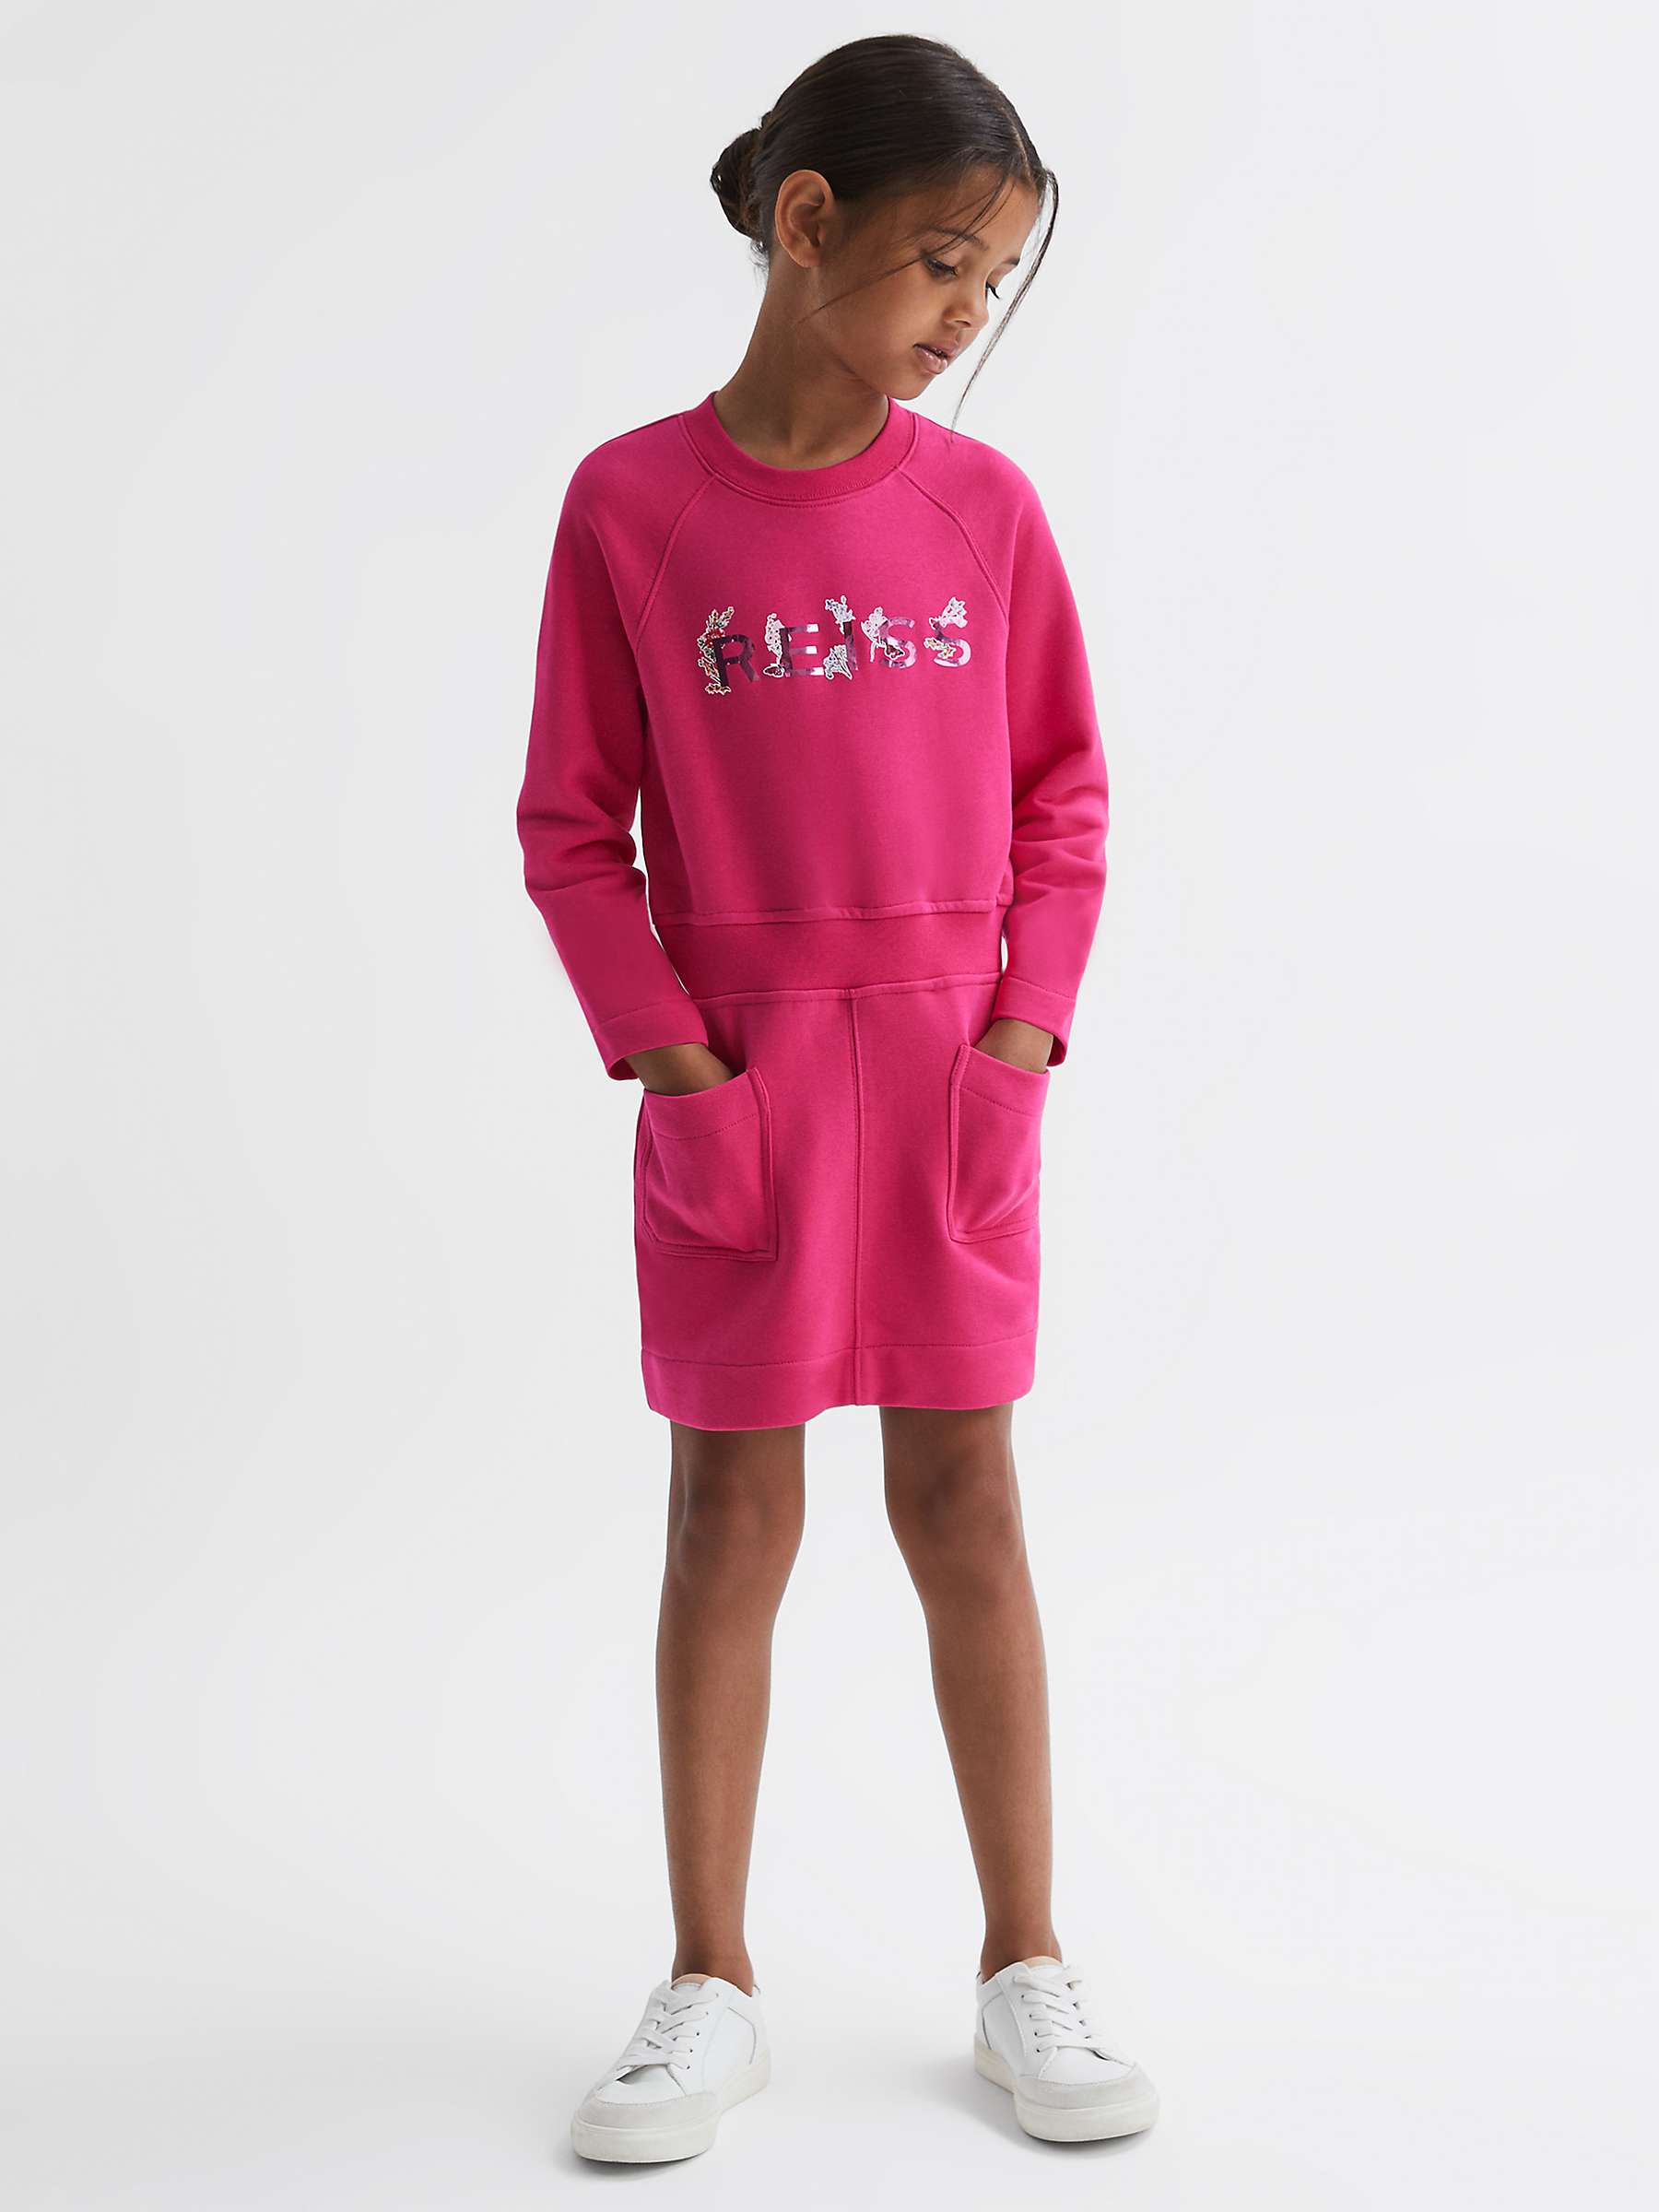 Buy Reiss Kids' Janine Floral Detail Logo Jersey Dress, Pink Online at johnlewis.com